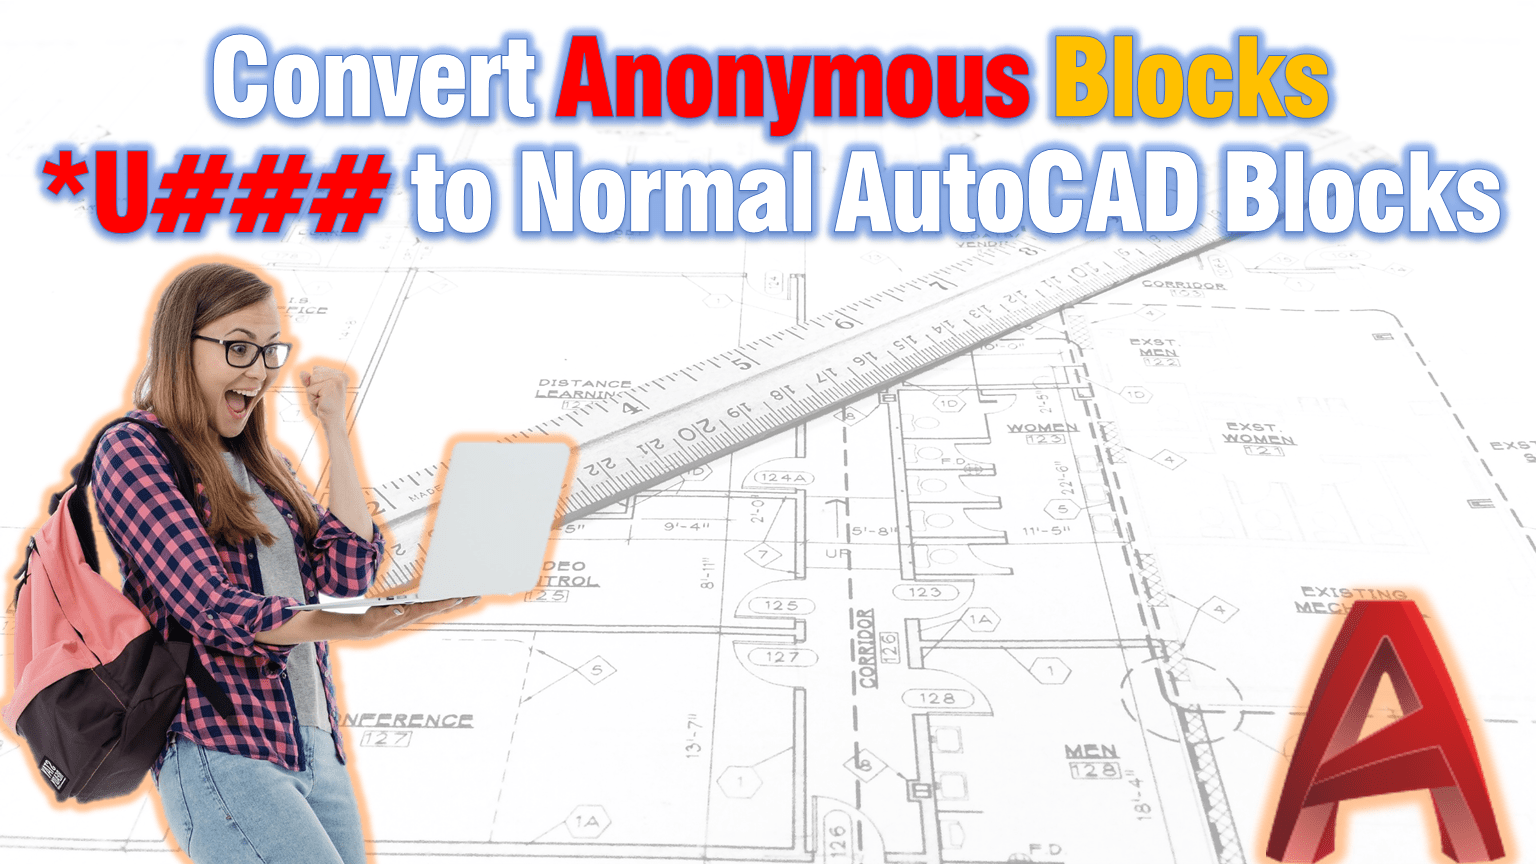 *U### Block to normal AutoCAD Block